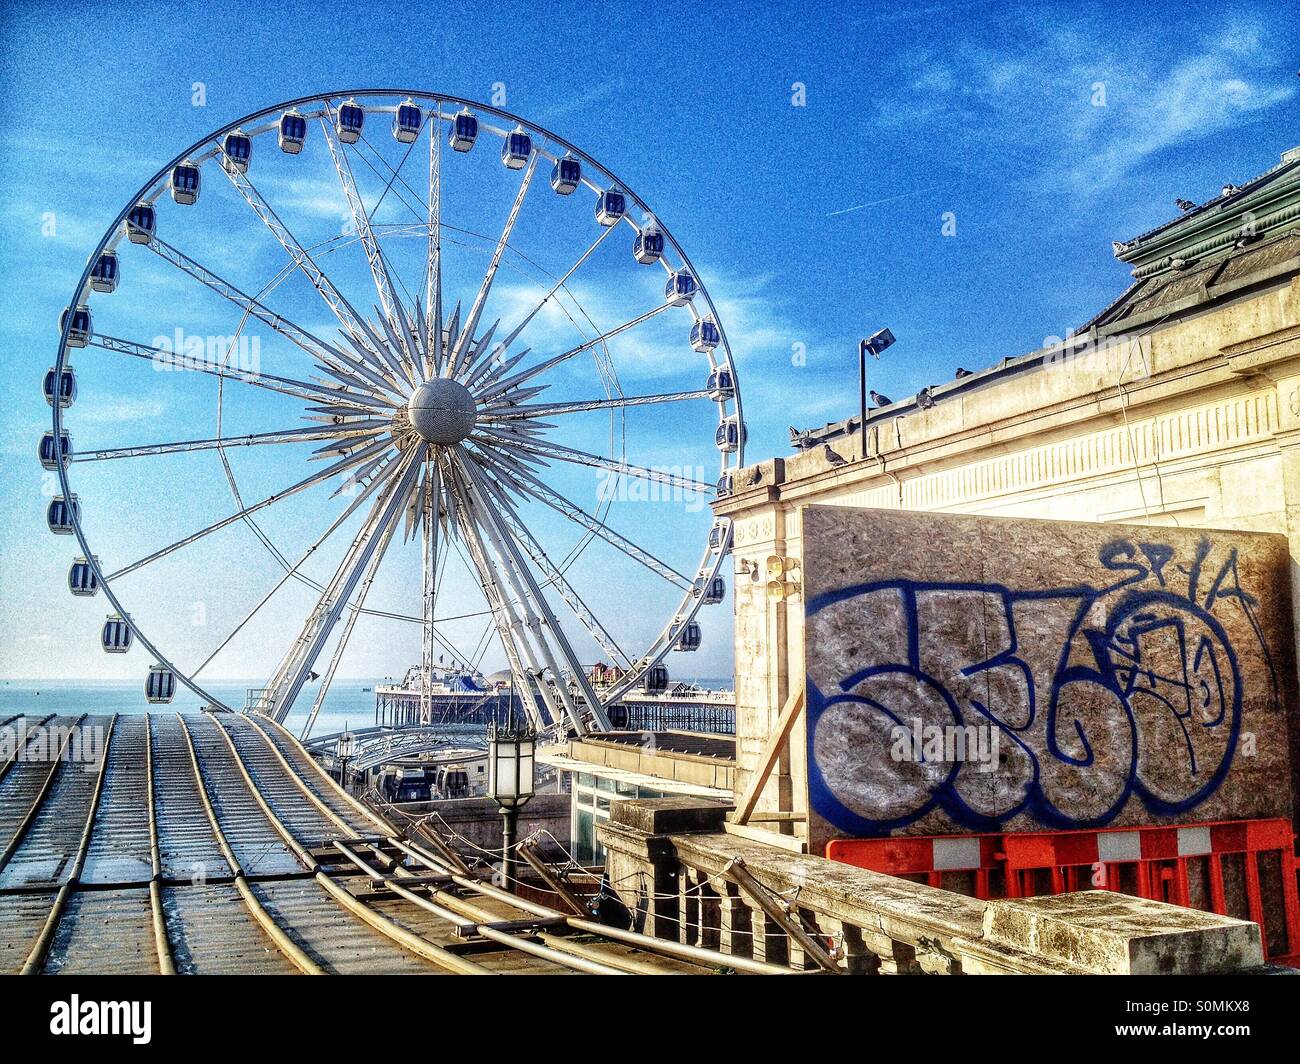 Ferris Wheel and graffiti Stock Photo